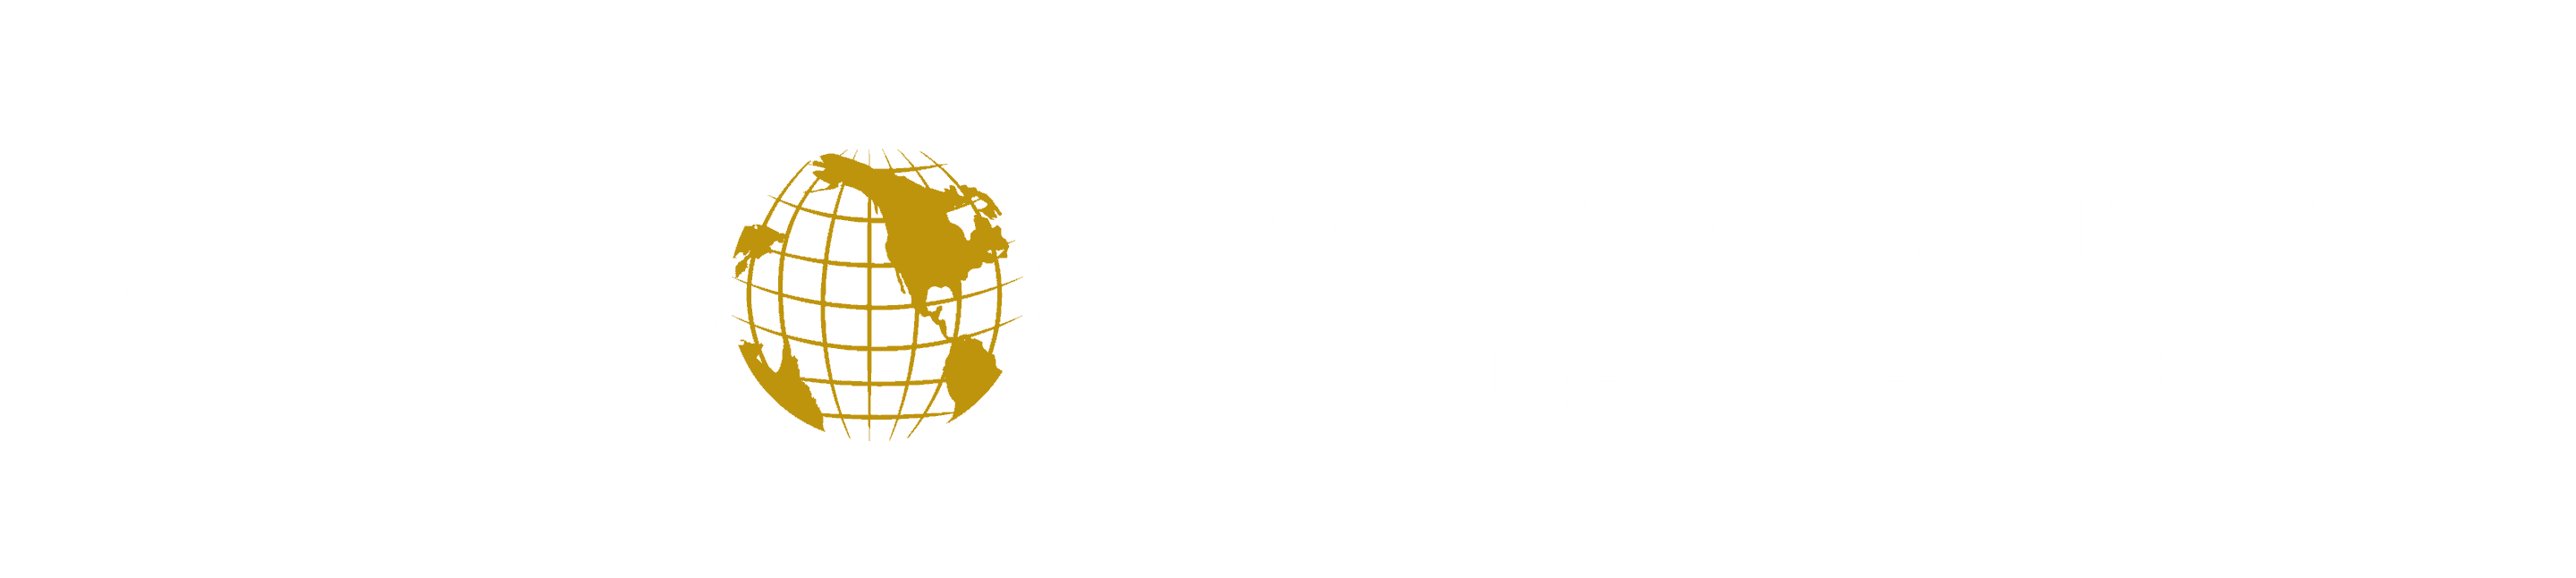 ECO logo horizontal